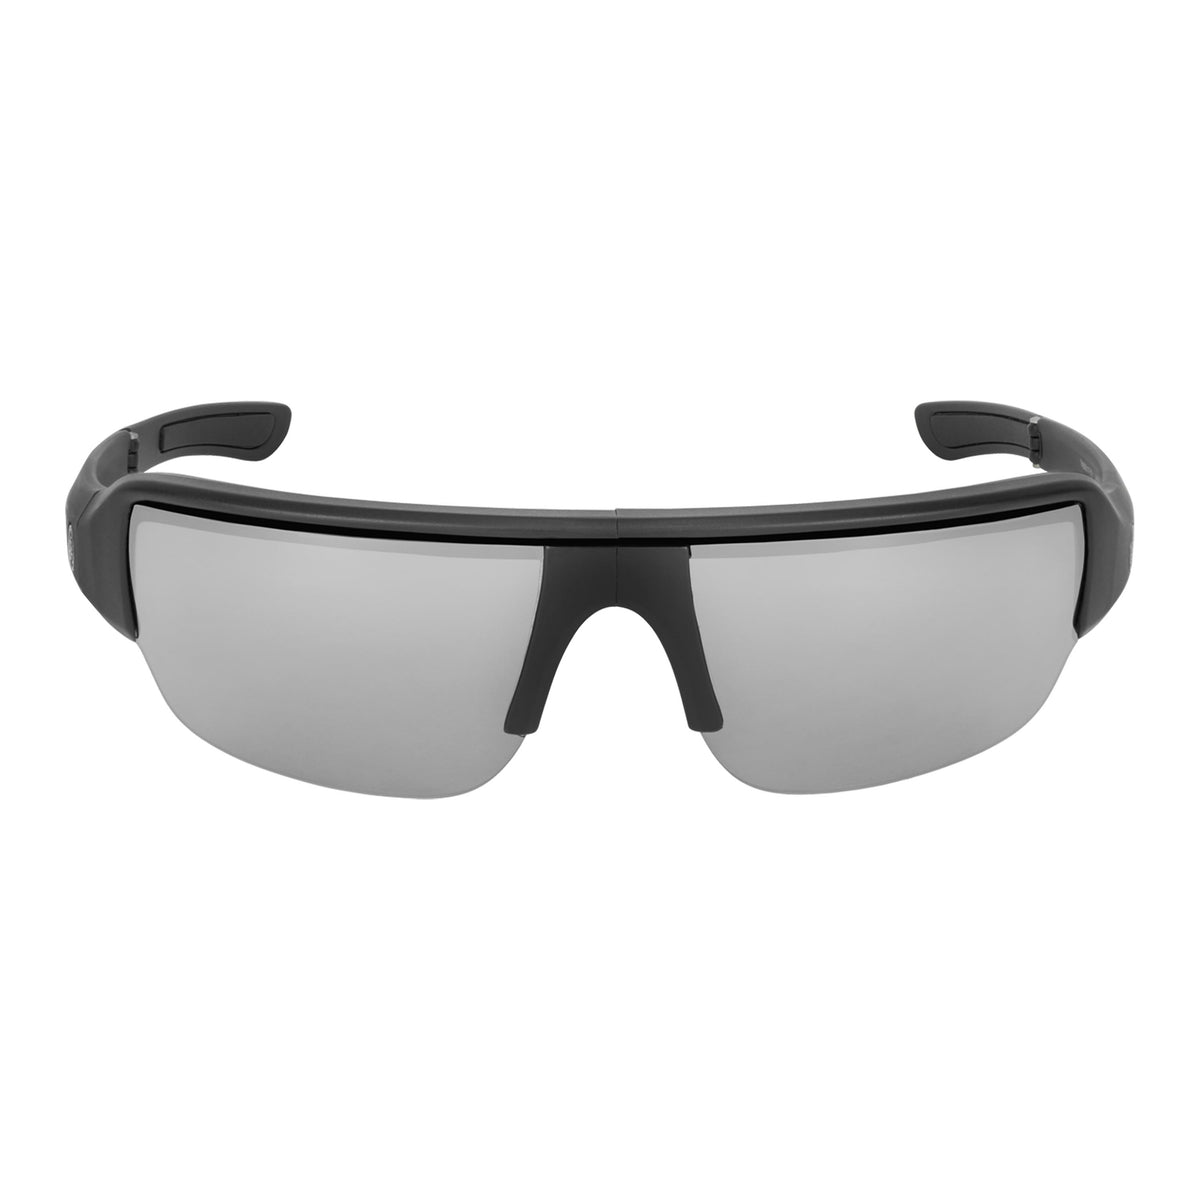 Popticals, Premium Compact Sunglasses, PopGun, 010010-BMLN, Polarized Sunglasses, Matte Black Frame, Gray Lenses w/Silver Mirror Finish, Front View